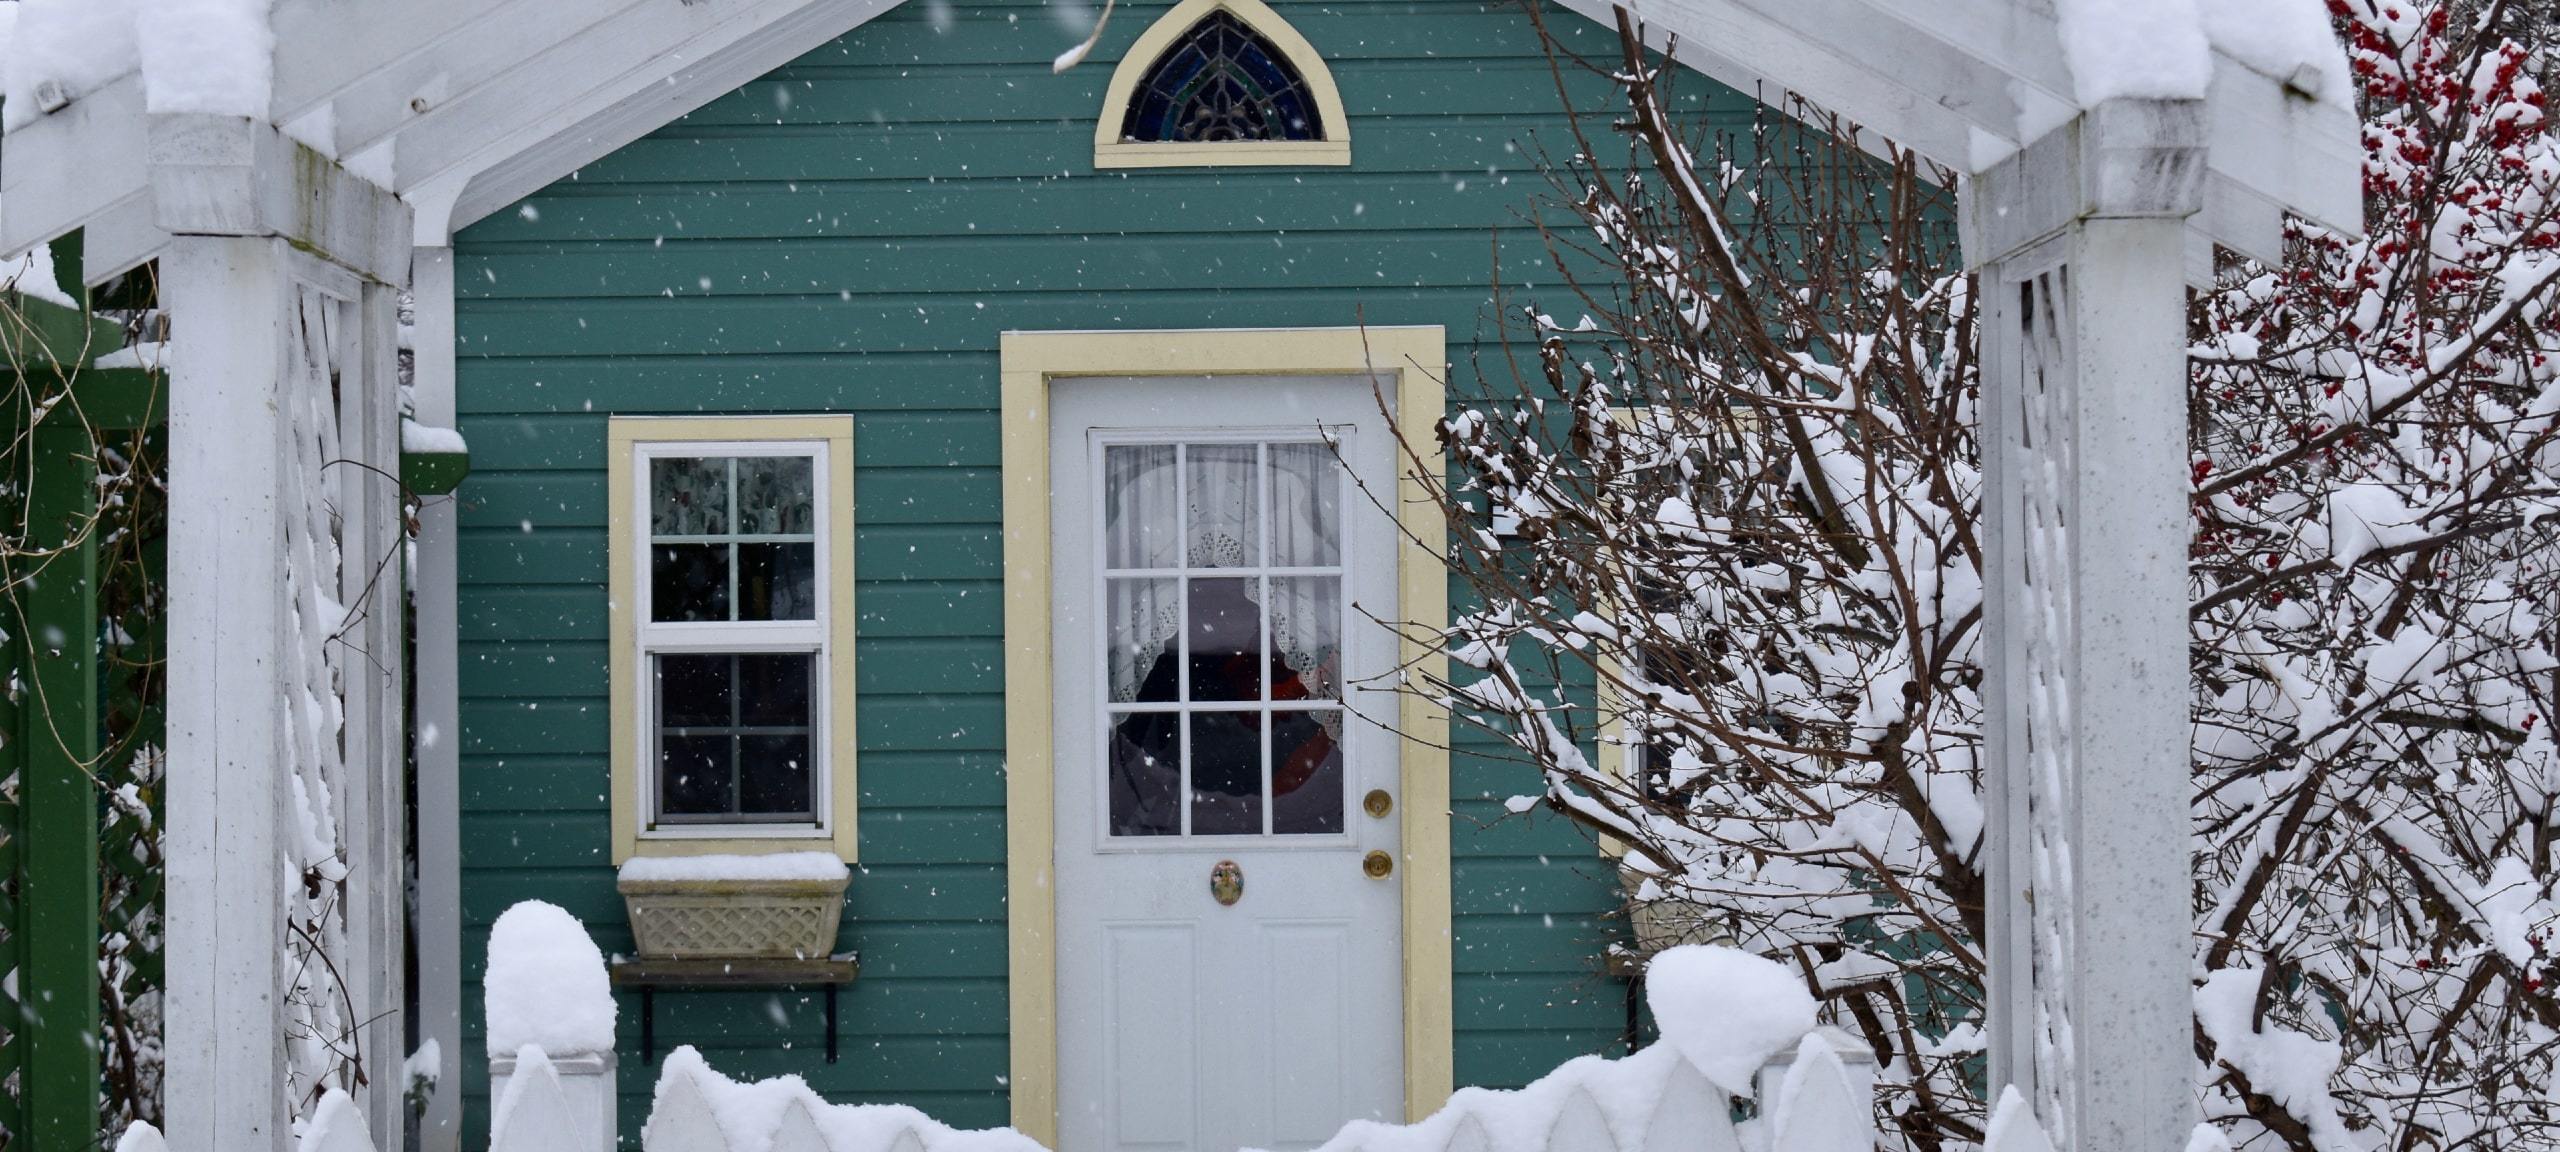 Green cottage in Hyattsville, Maryland after snowstorm